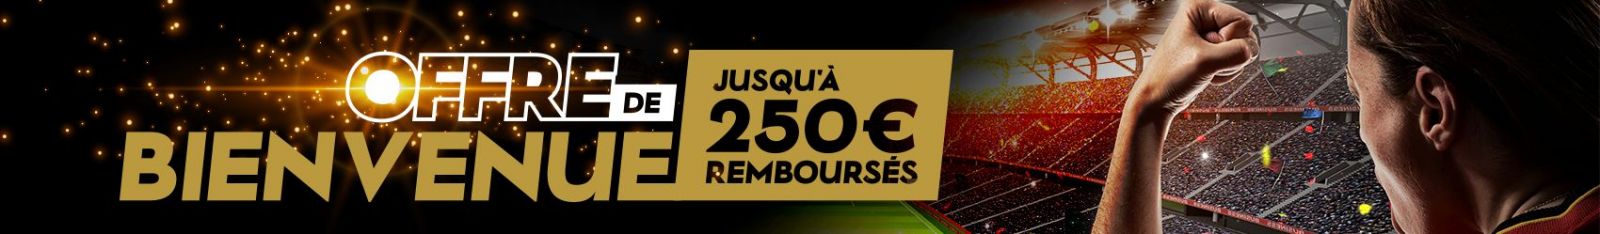 Bonus Parions Sport 150€ avis et test bookmaker